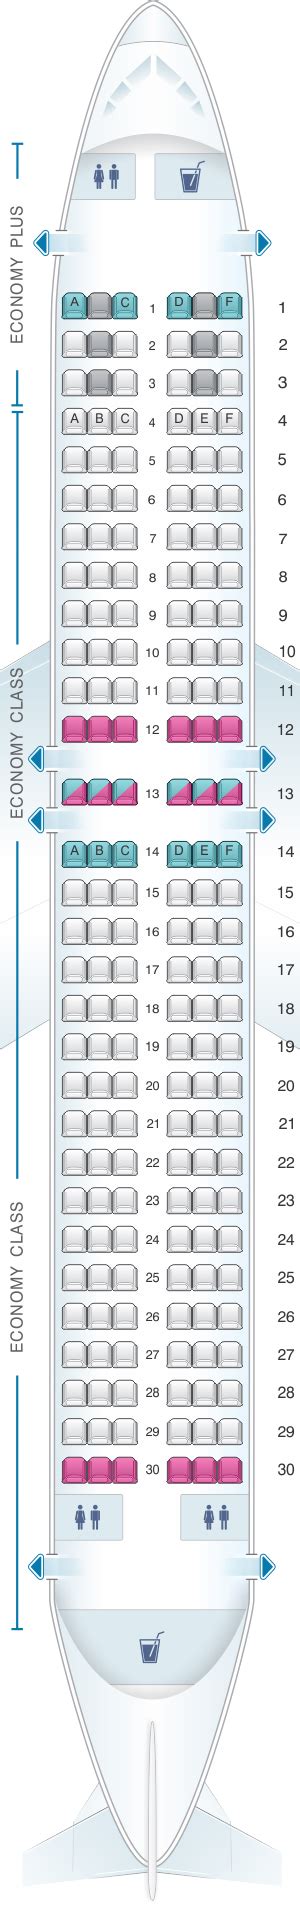 boeing 737 max 8 seating chart westjet